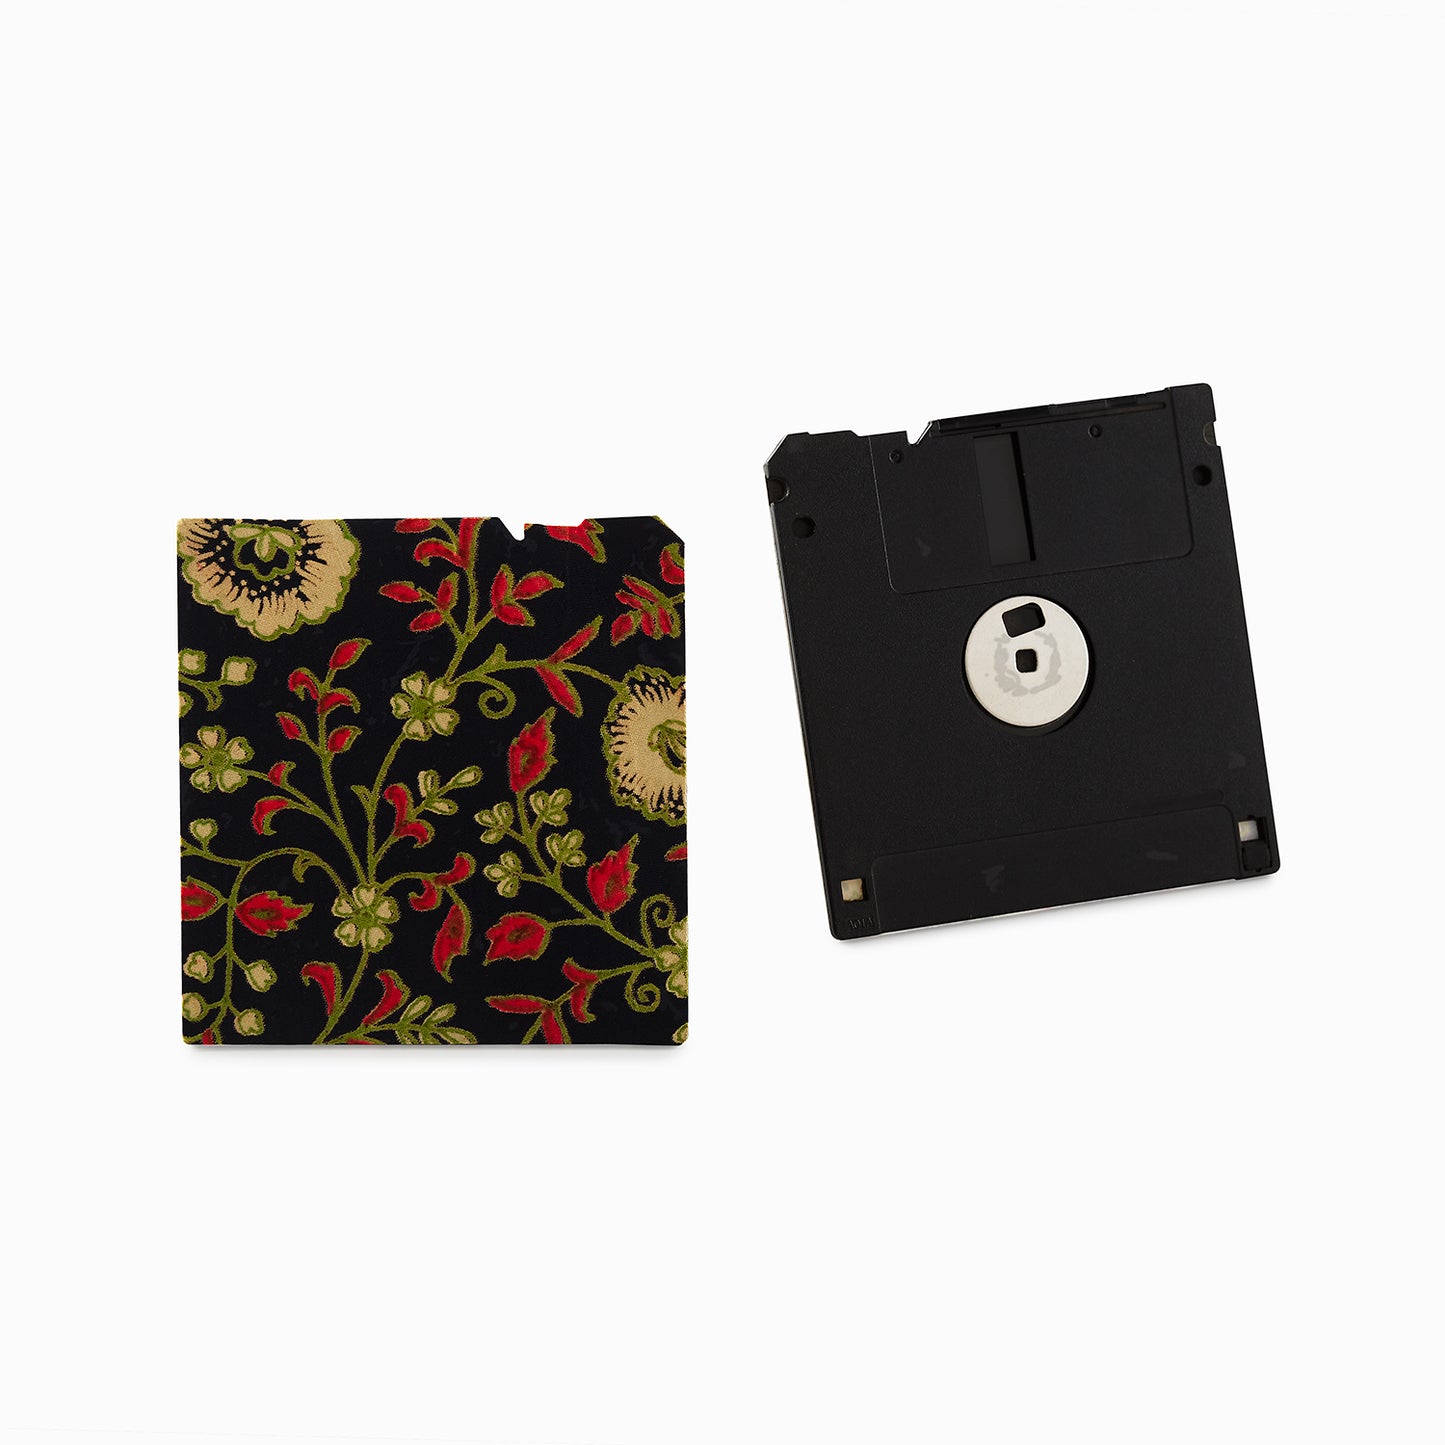 Coal Black -Floppy Disk Coaster Set of 2